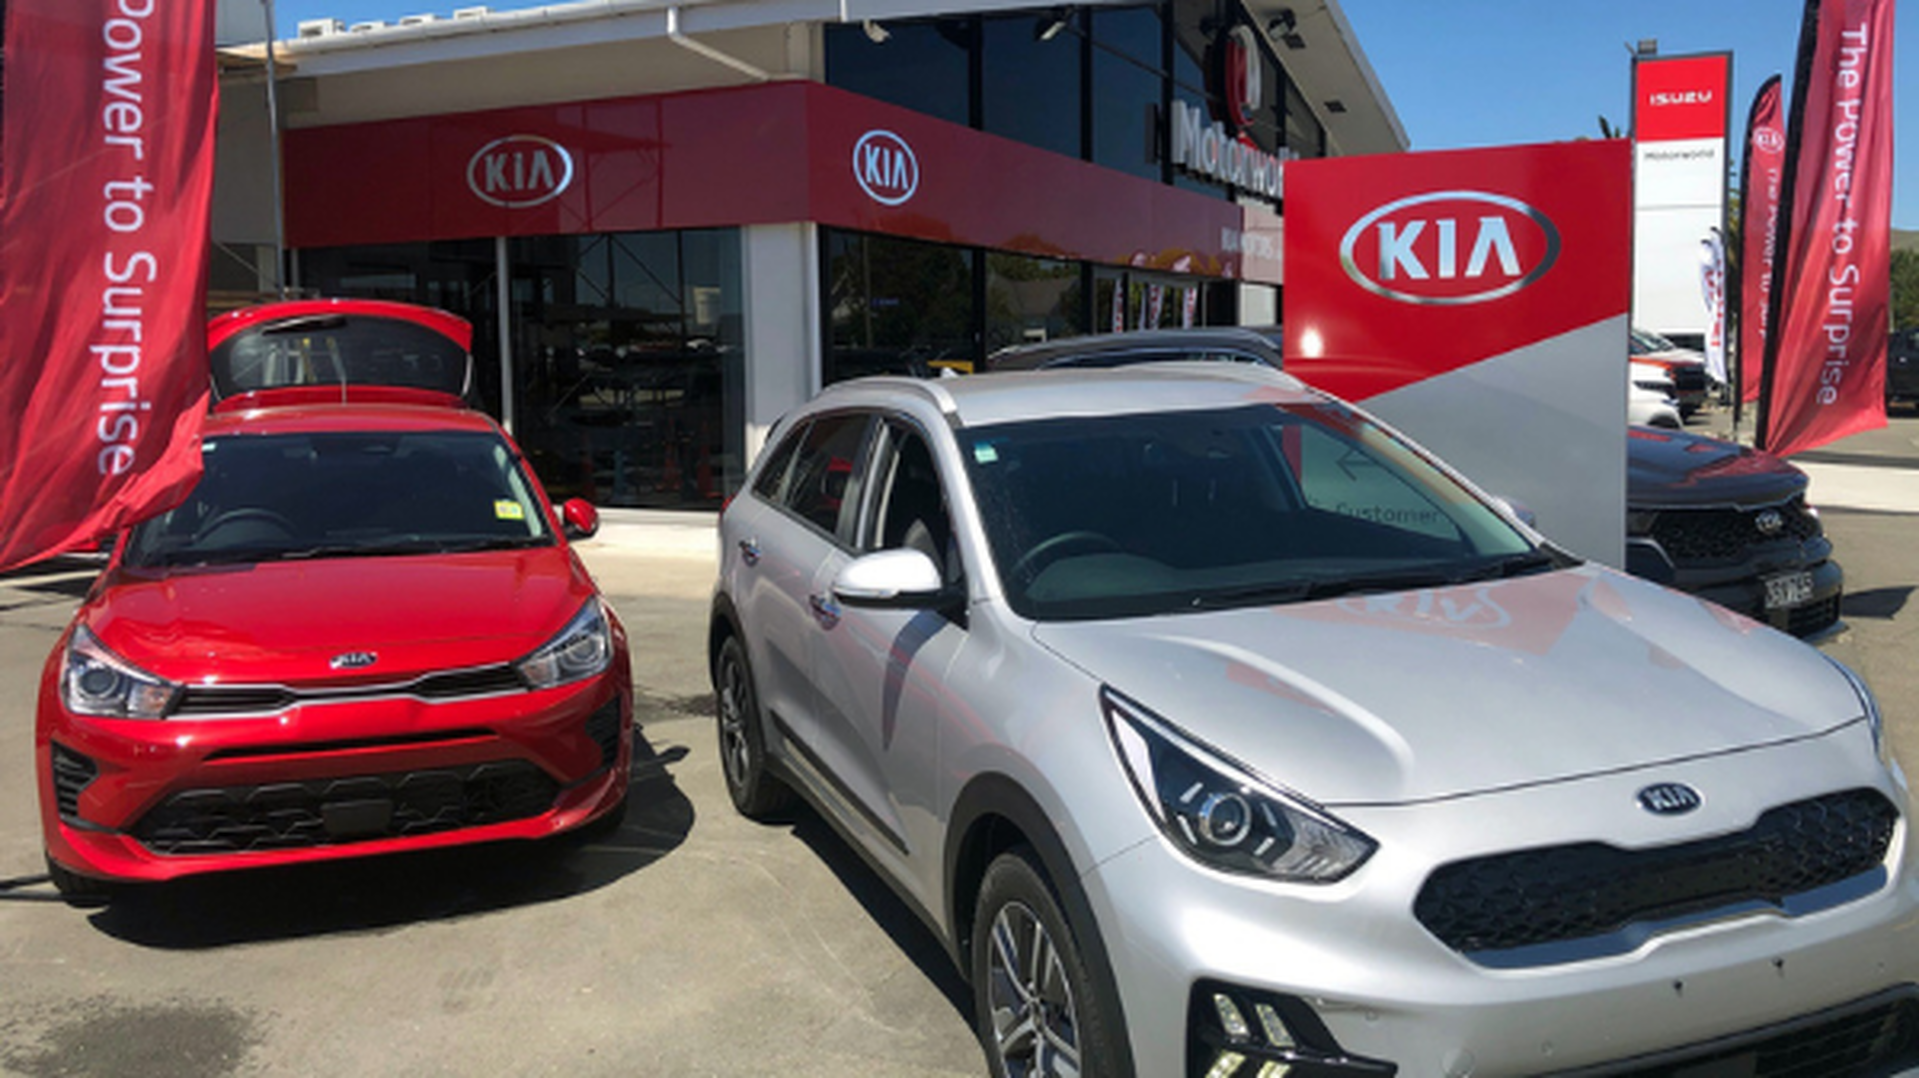 New Kia dealership first for region